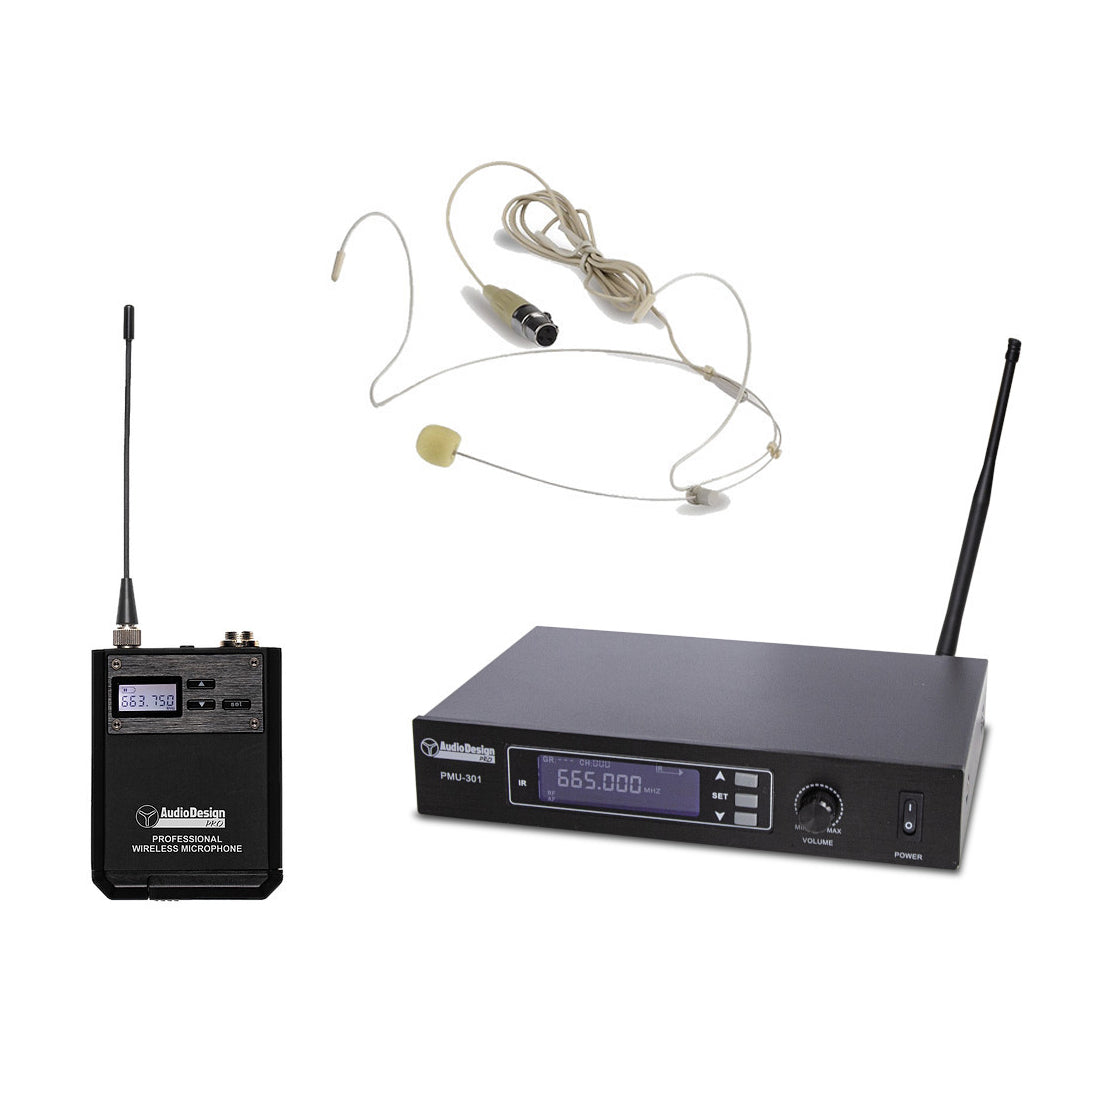 Audiodesign Pro Sistema wireless UHF a frequenza variabile, sistema microfonico wireless, Set ricevitore, body pack e microfono ad archetto